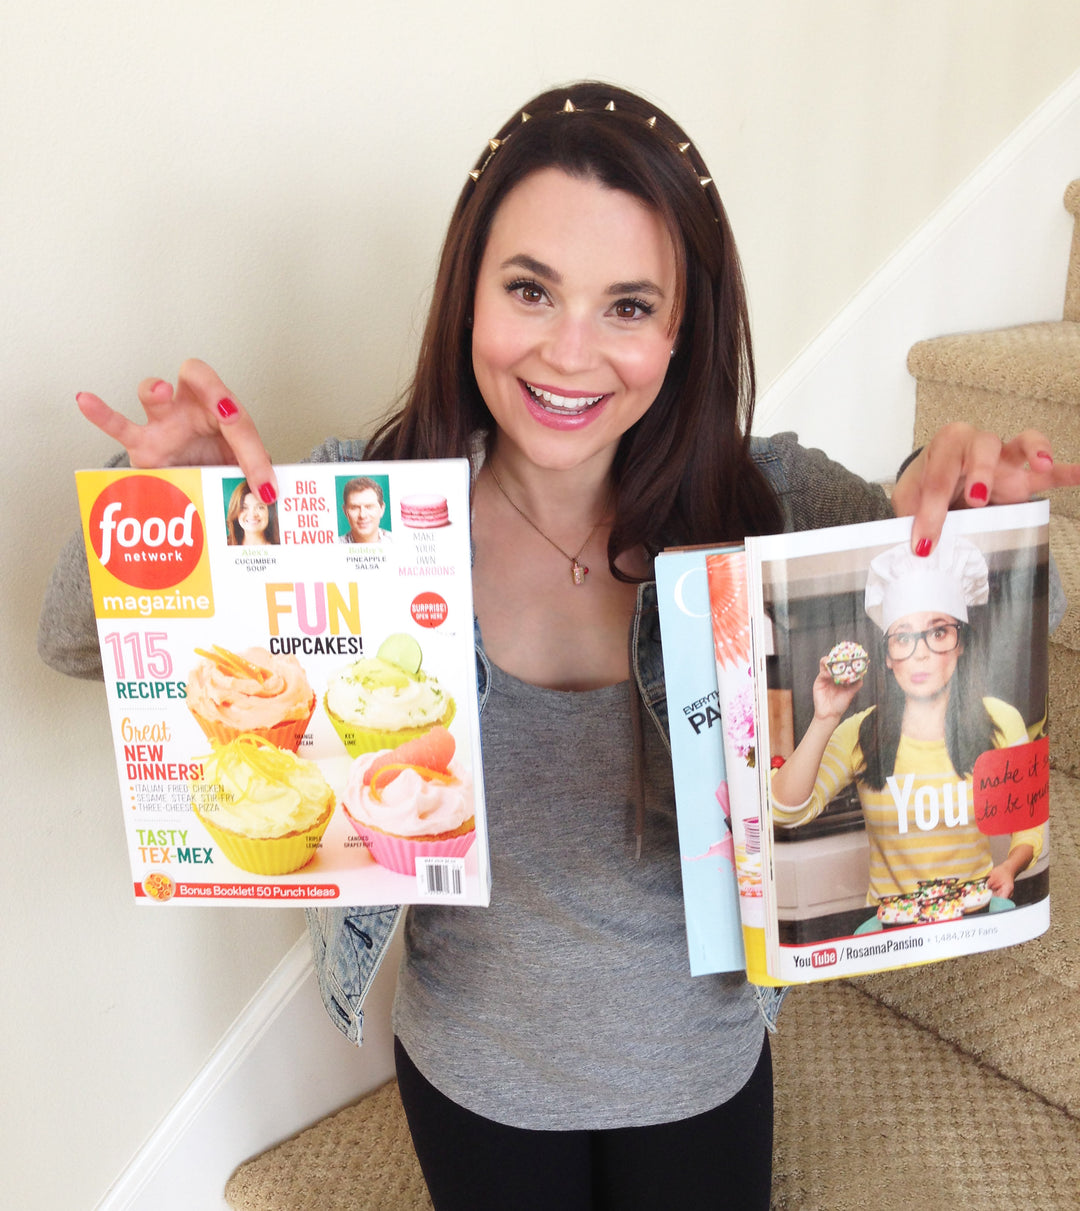 Rosanna Pansino Featured in "Food Network Magazine"